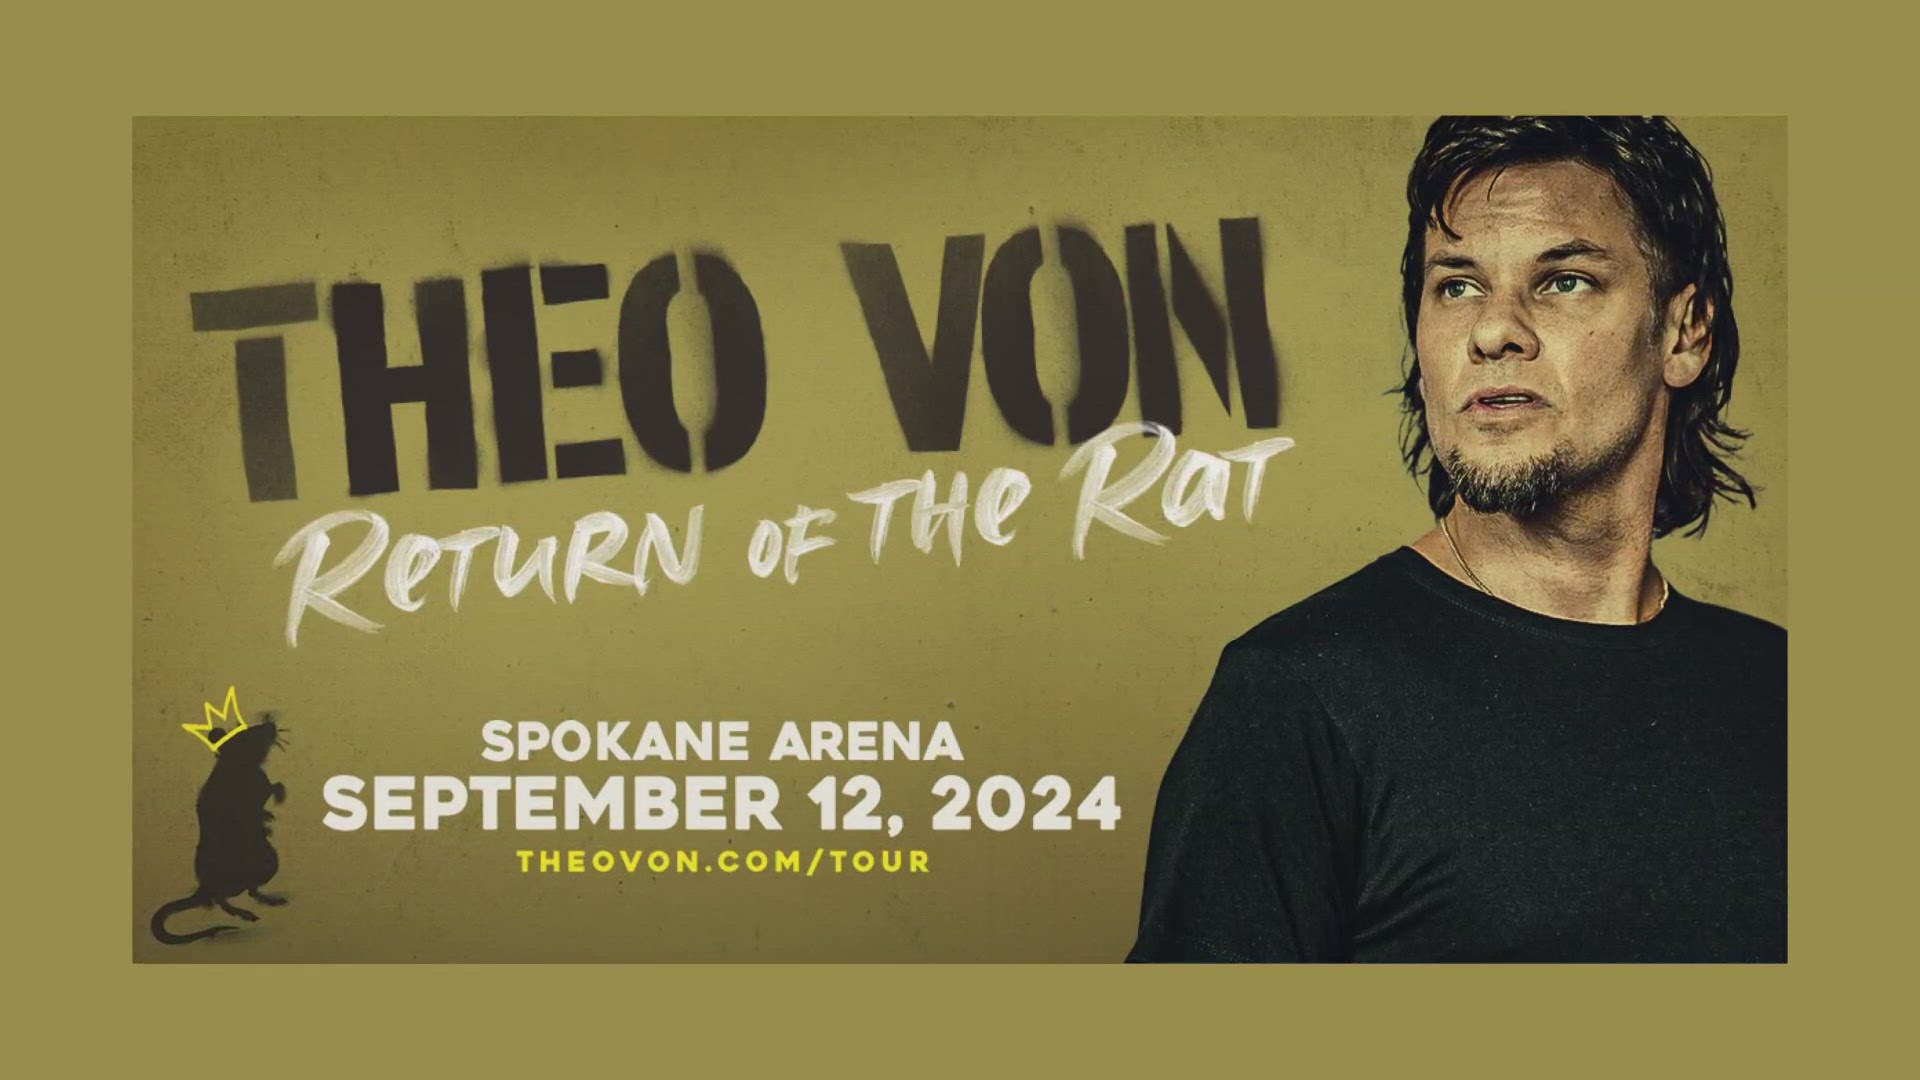 Von is bringing his Return of the Rat Tour to Spokane on September 12.